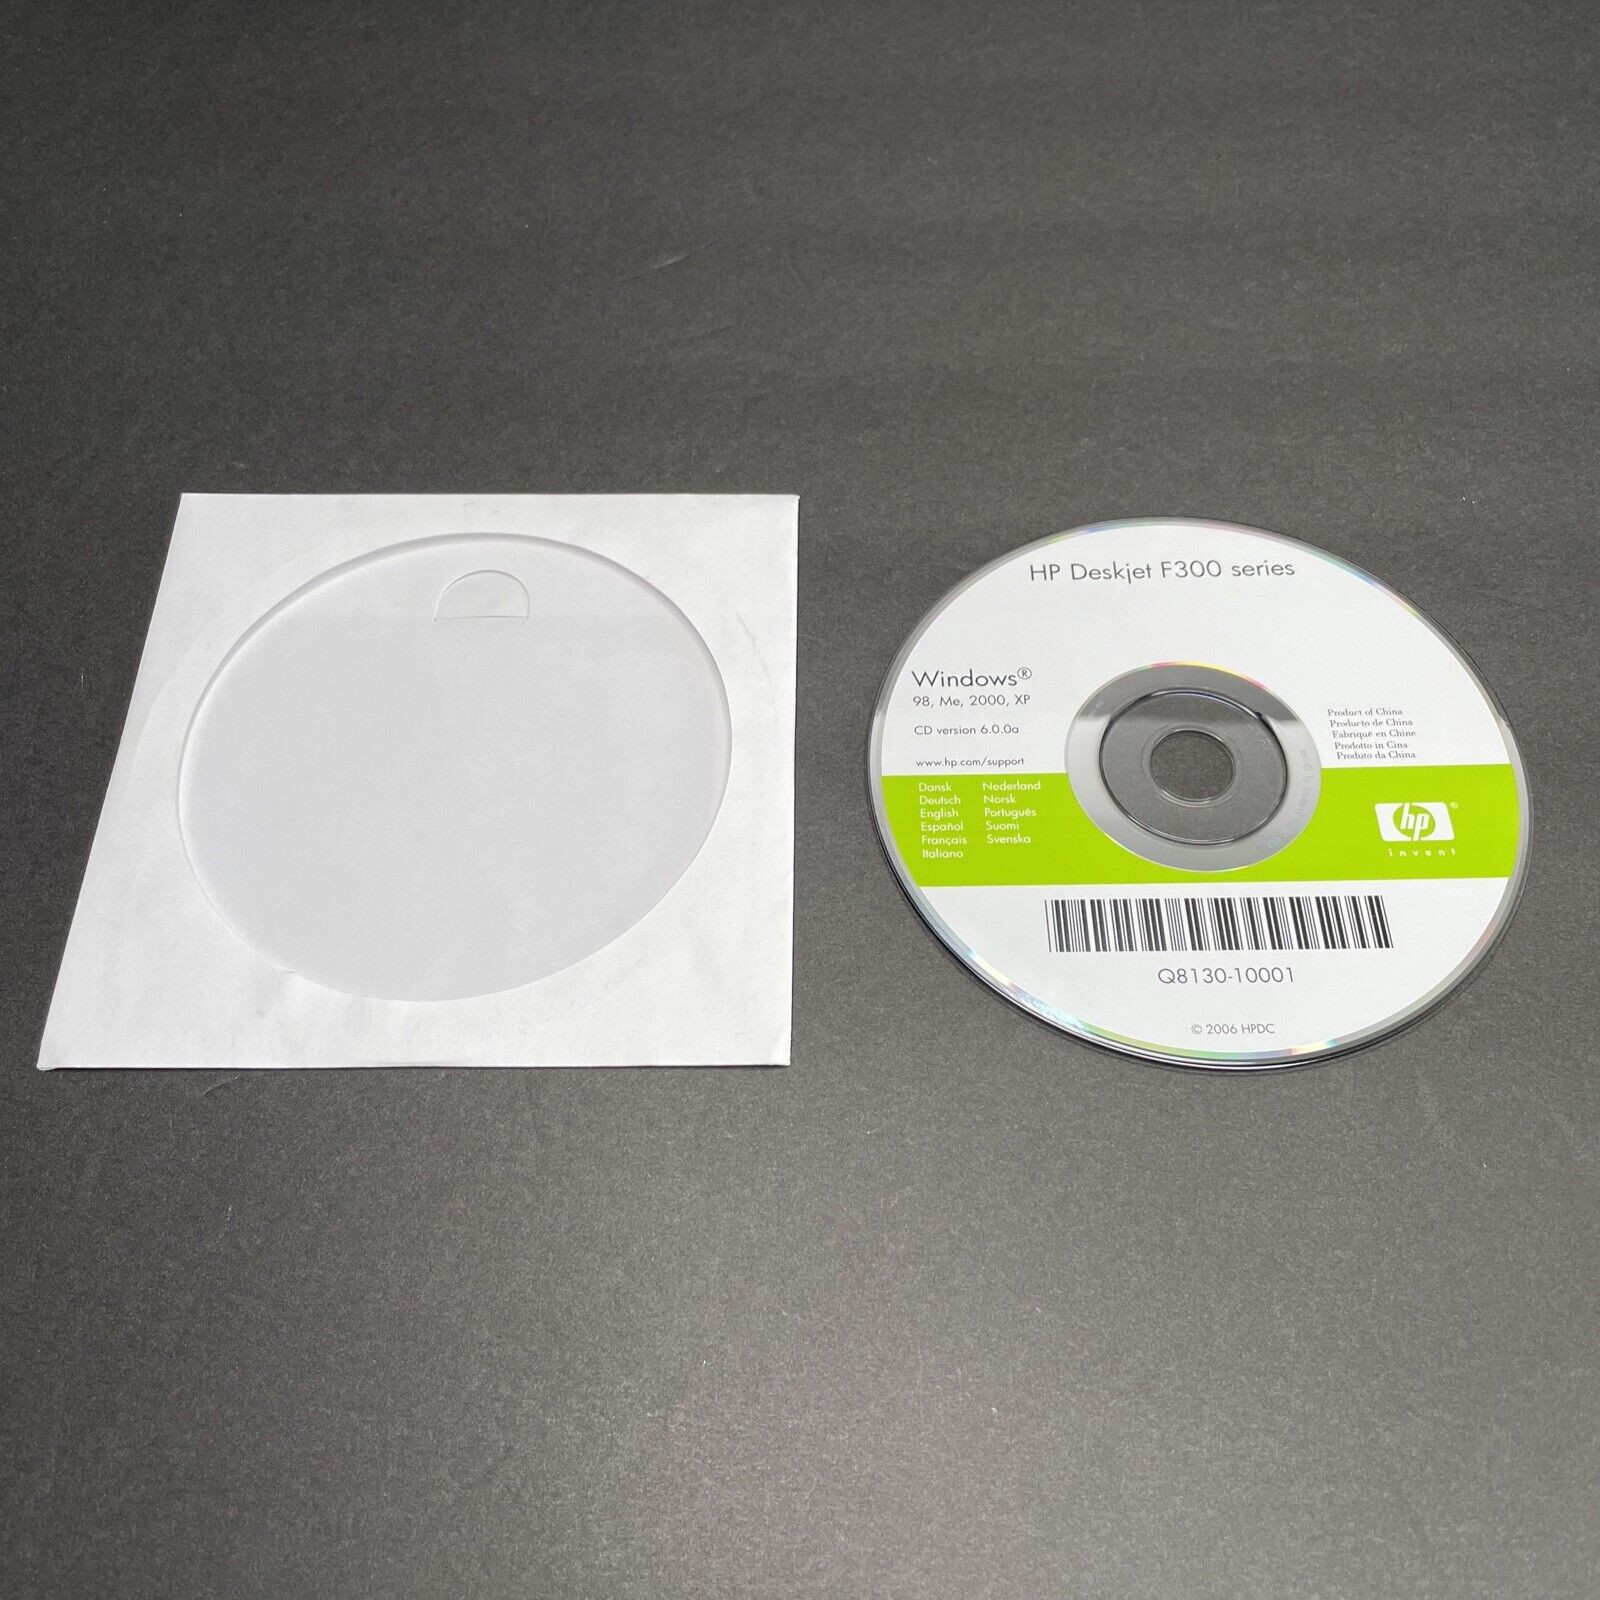 Setup CD ROM for HP OfficeJet 6300 Series Software for Windows 98, Me, 2000, XP